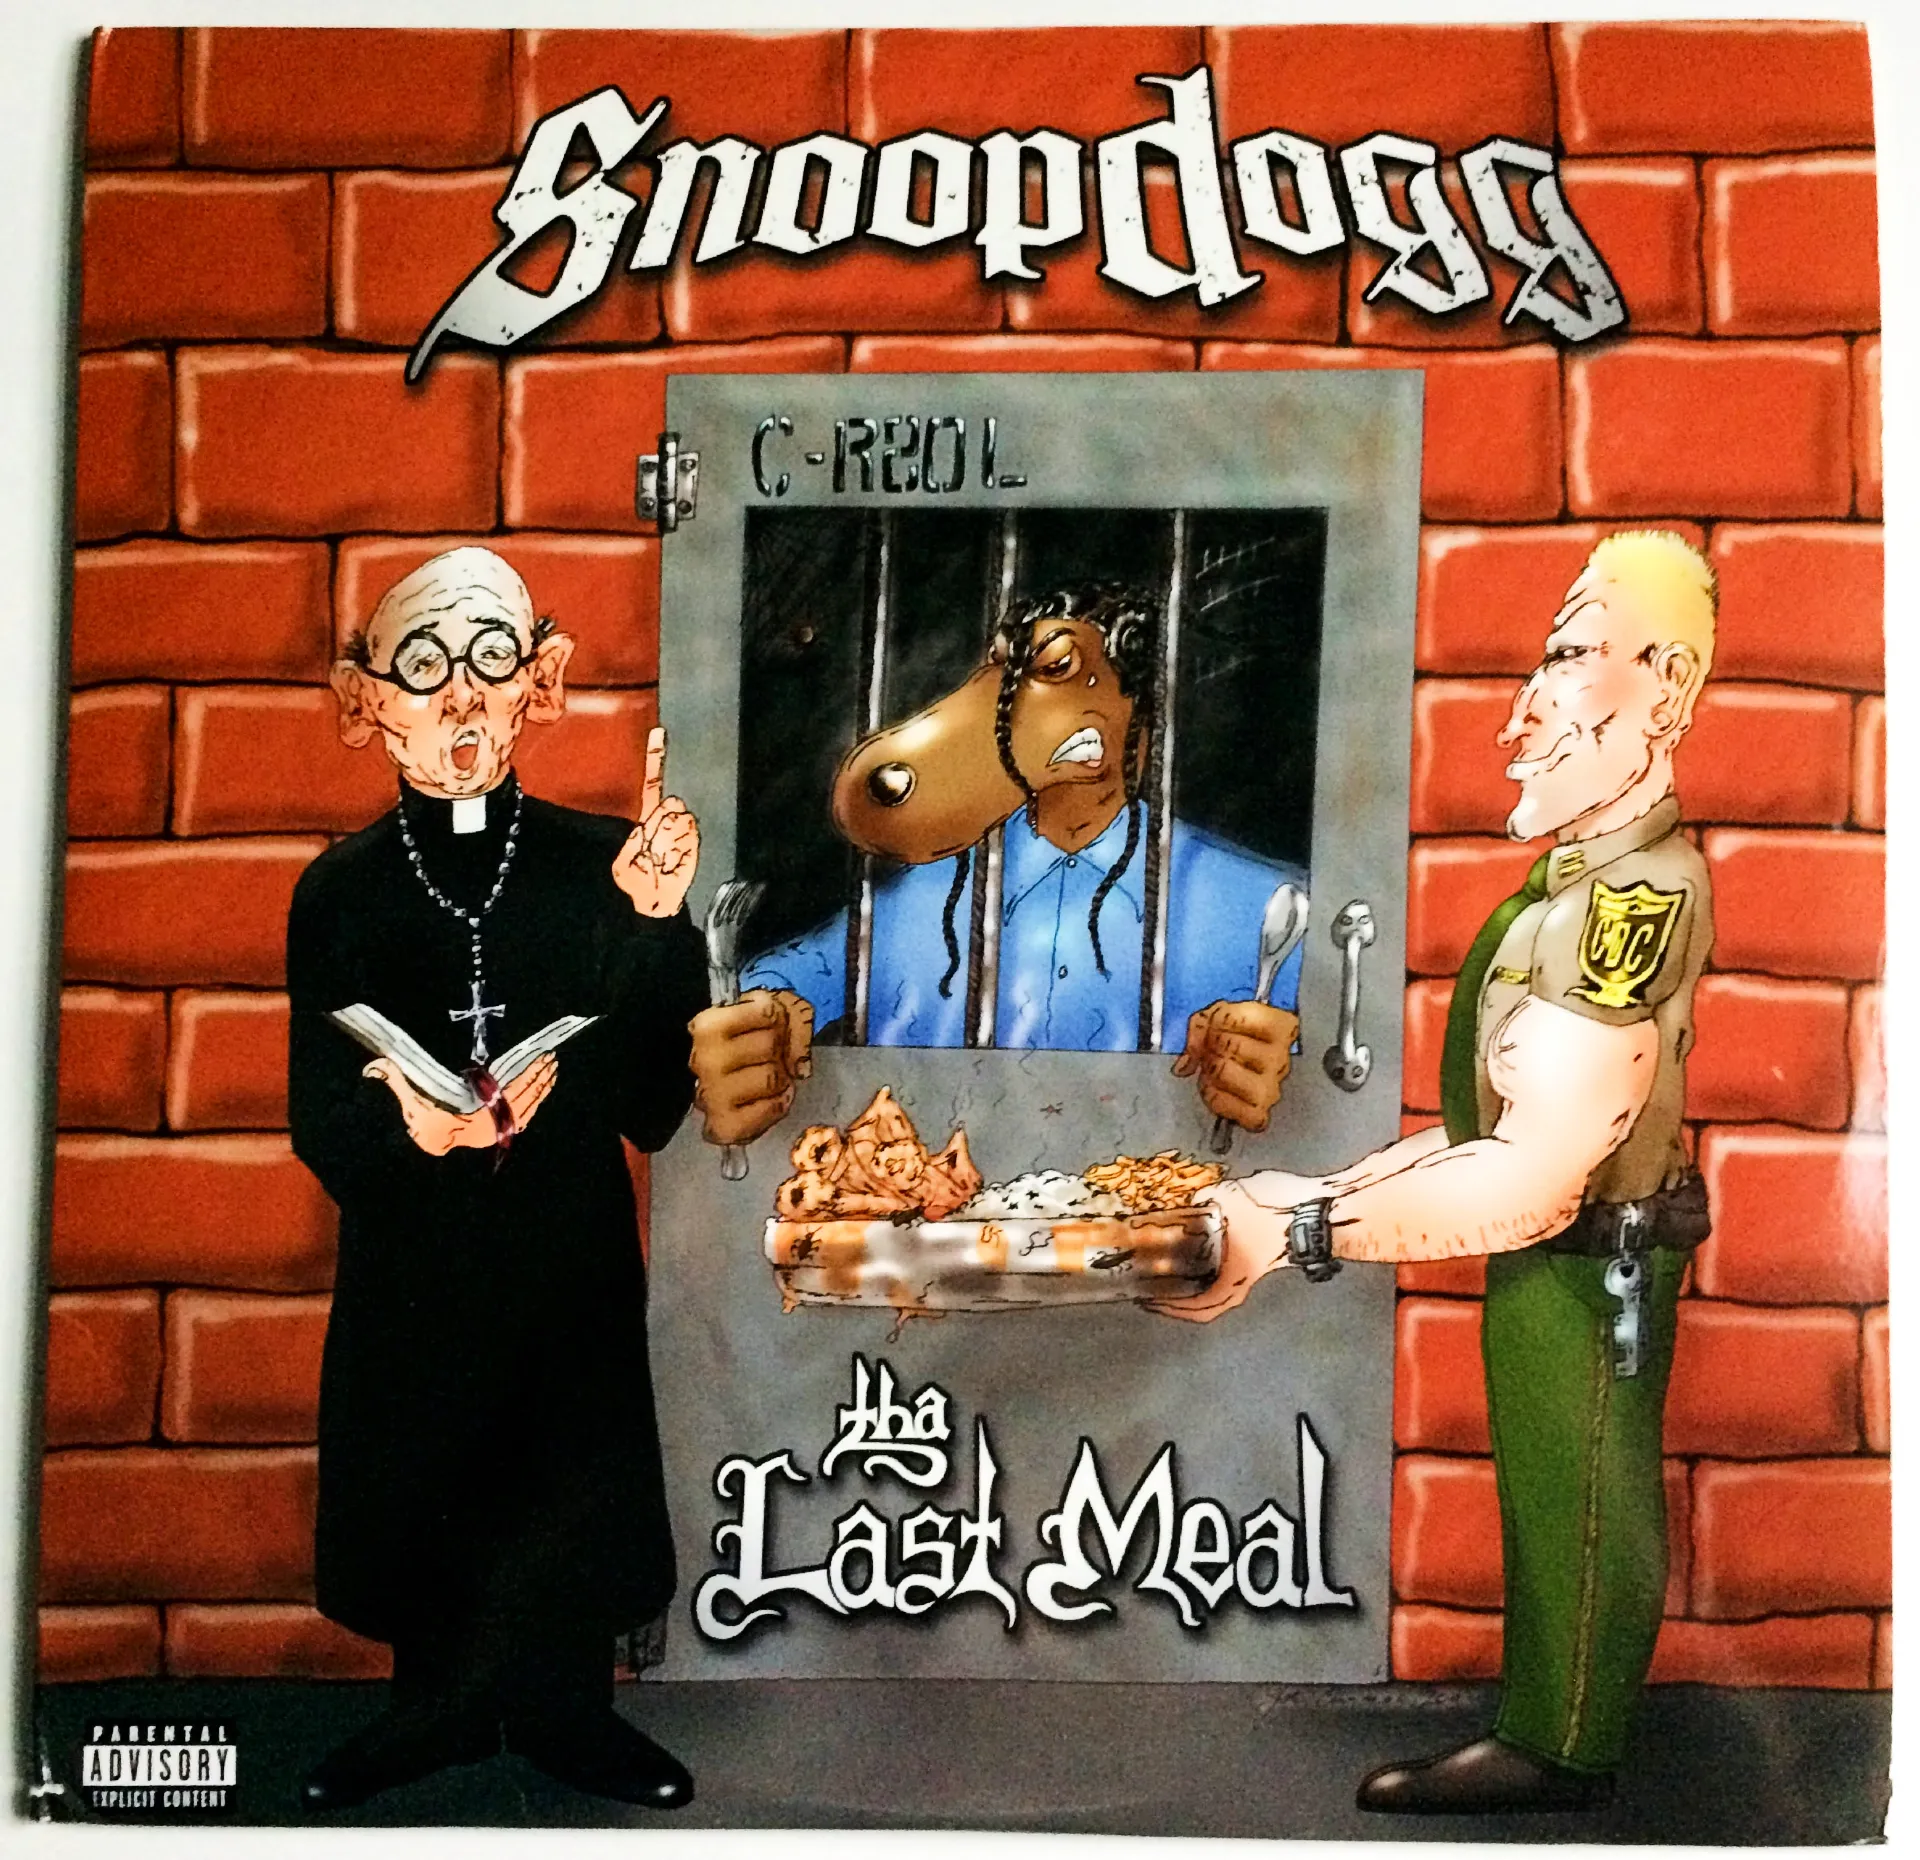 Snoop Dogg Tha Last Meal album cover